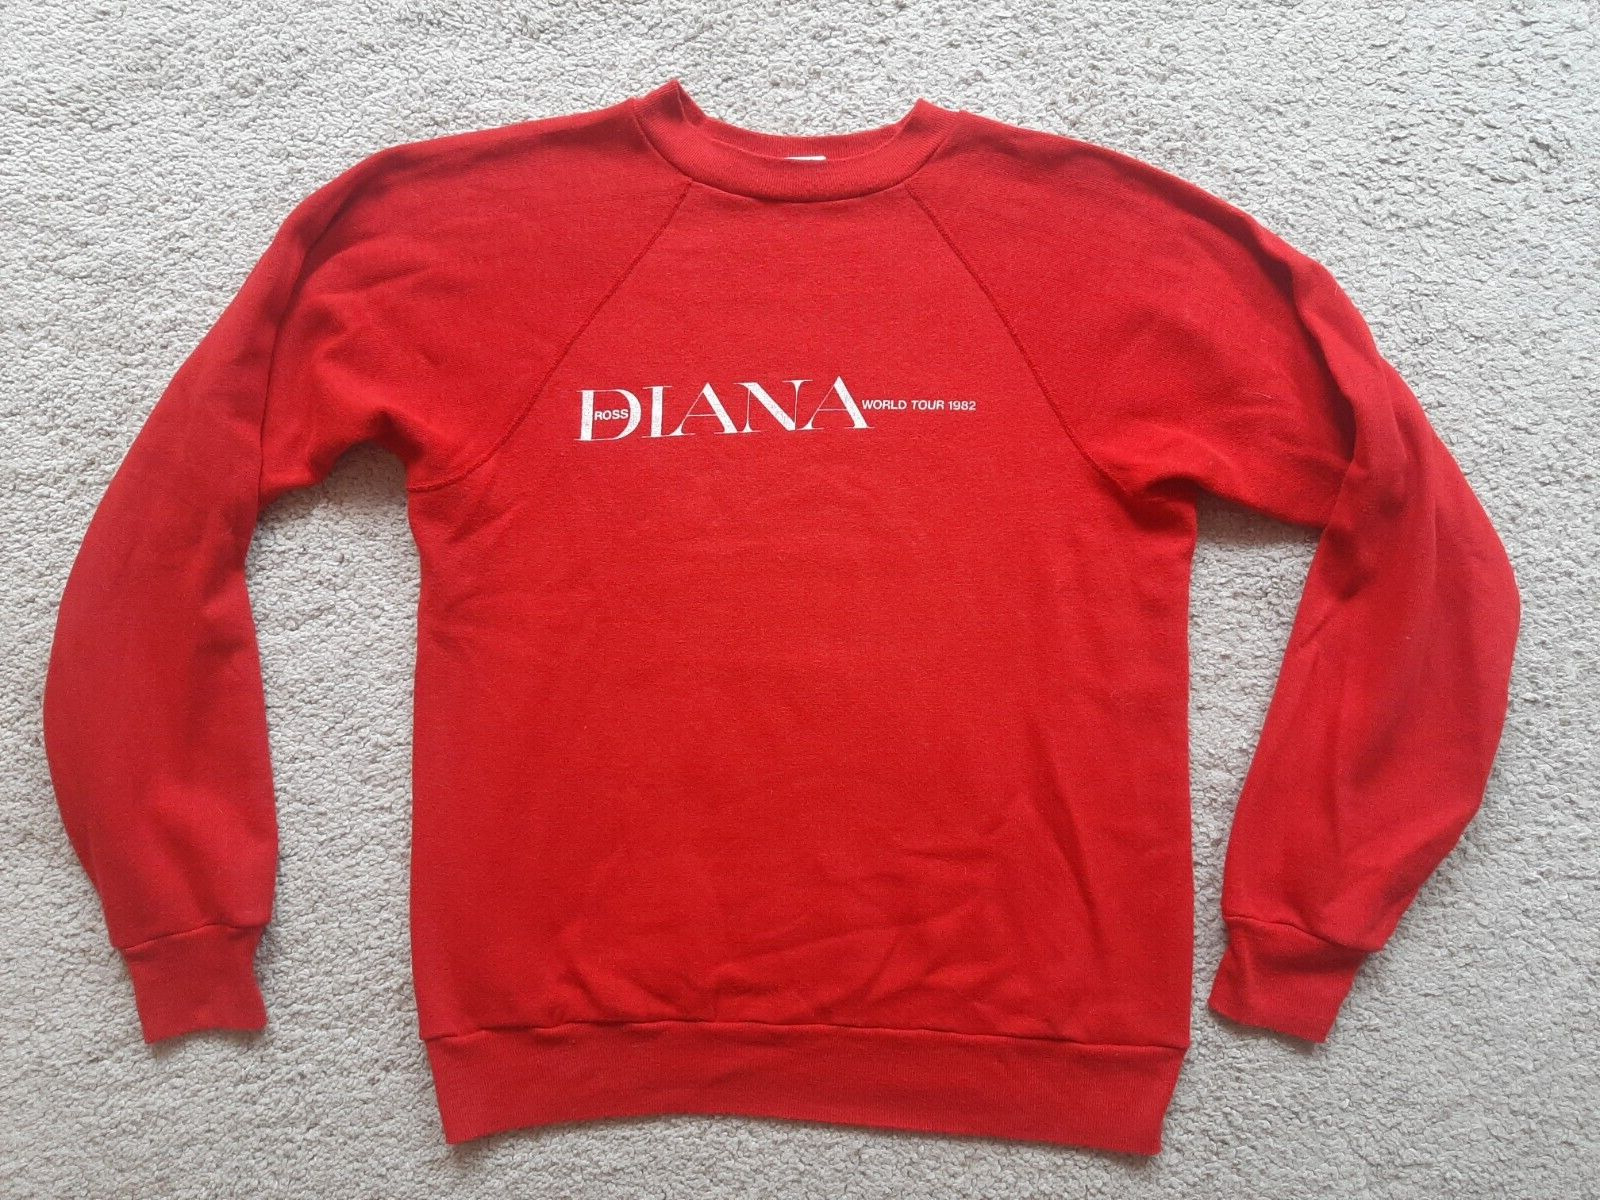 DIANA ROSS Vintage 1983 World Tour Sweatshirt Red S LP Soul R&B Supremes Shirt